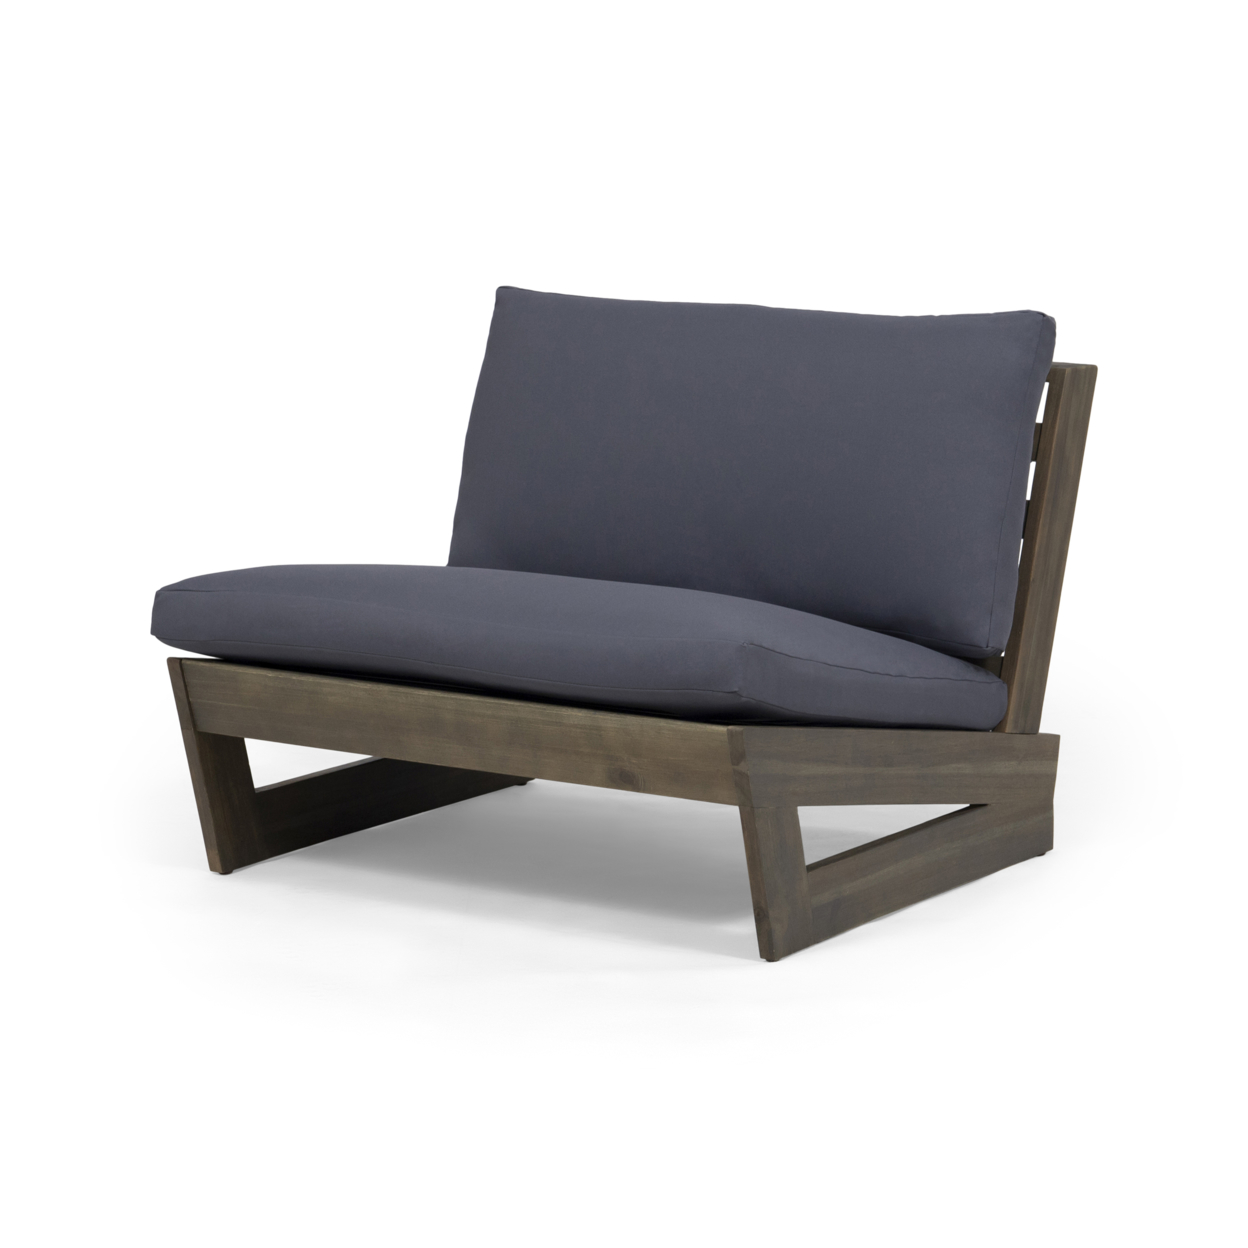 Emma Outdoor Acacia Wood Club Chairs With Cushions (Set Of 2) - Gray Finish, Dark Gray